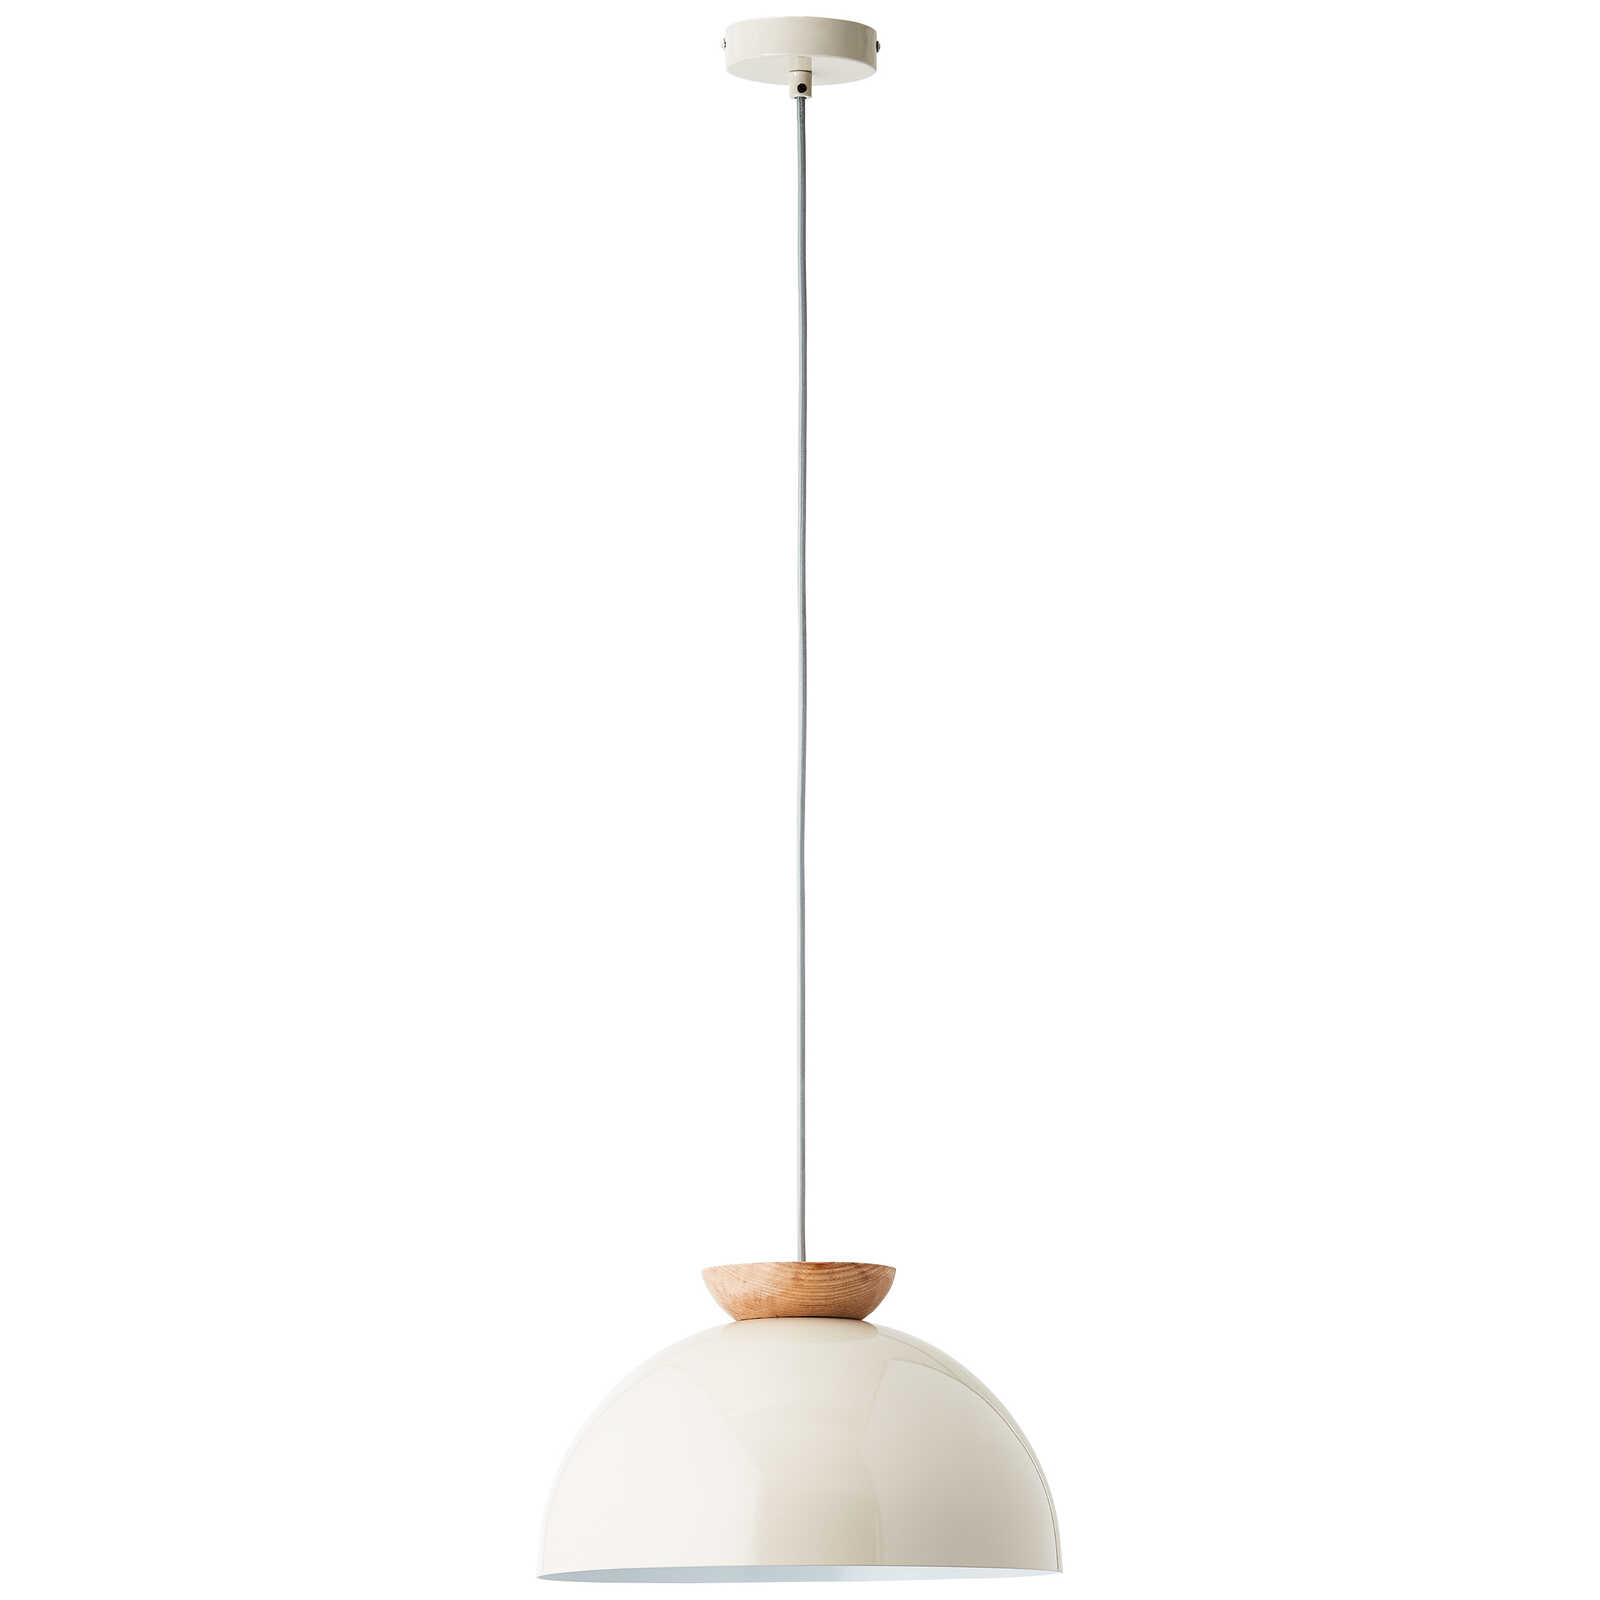             Lámpara colgante de madera - Lorena 1 - Beige
        